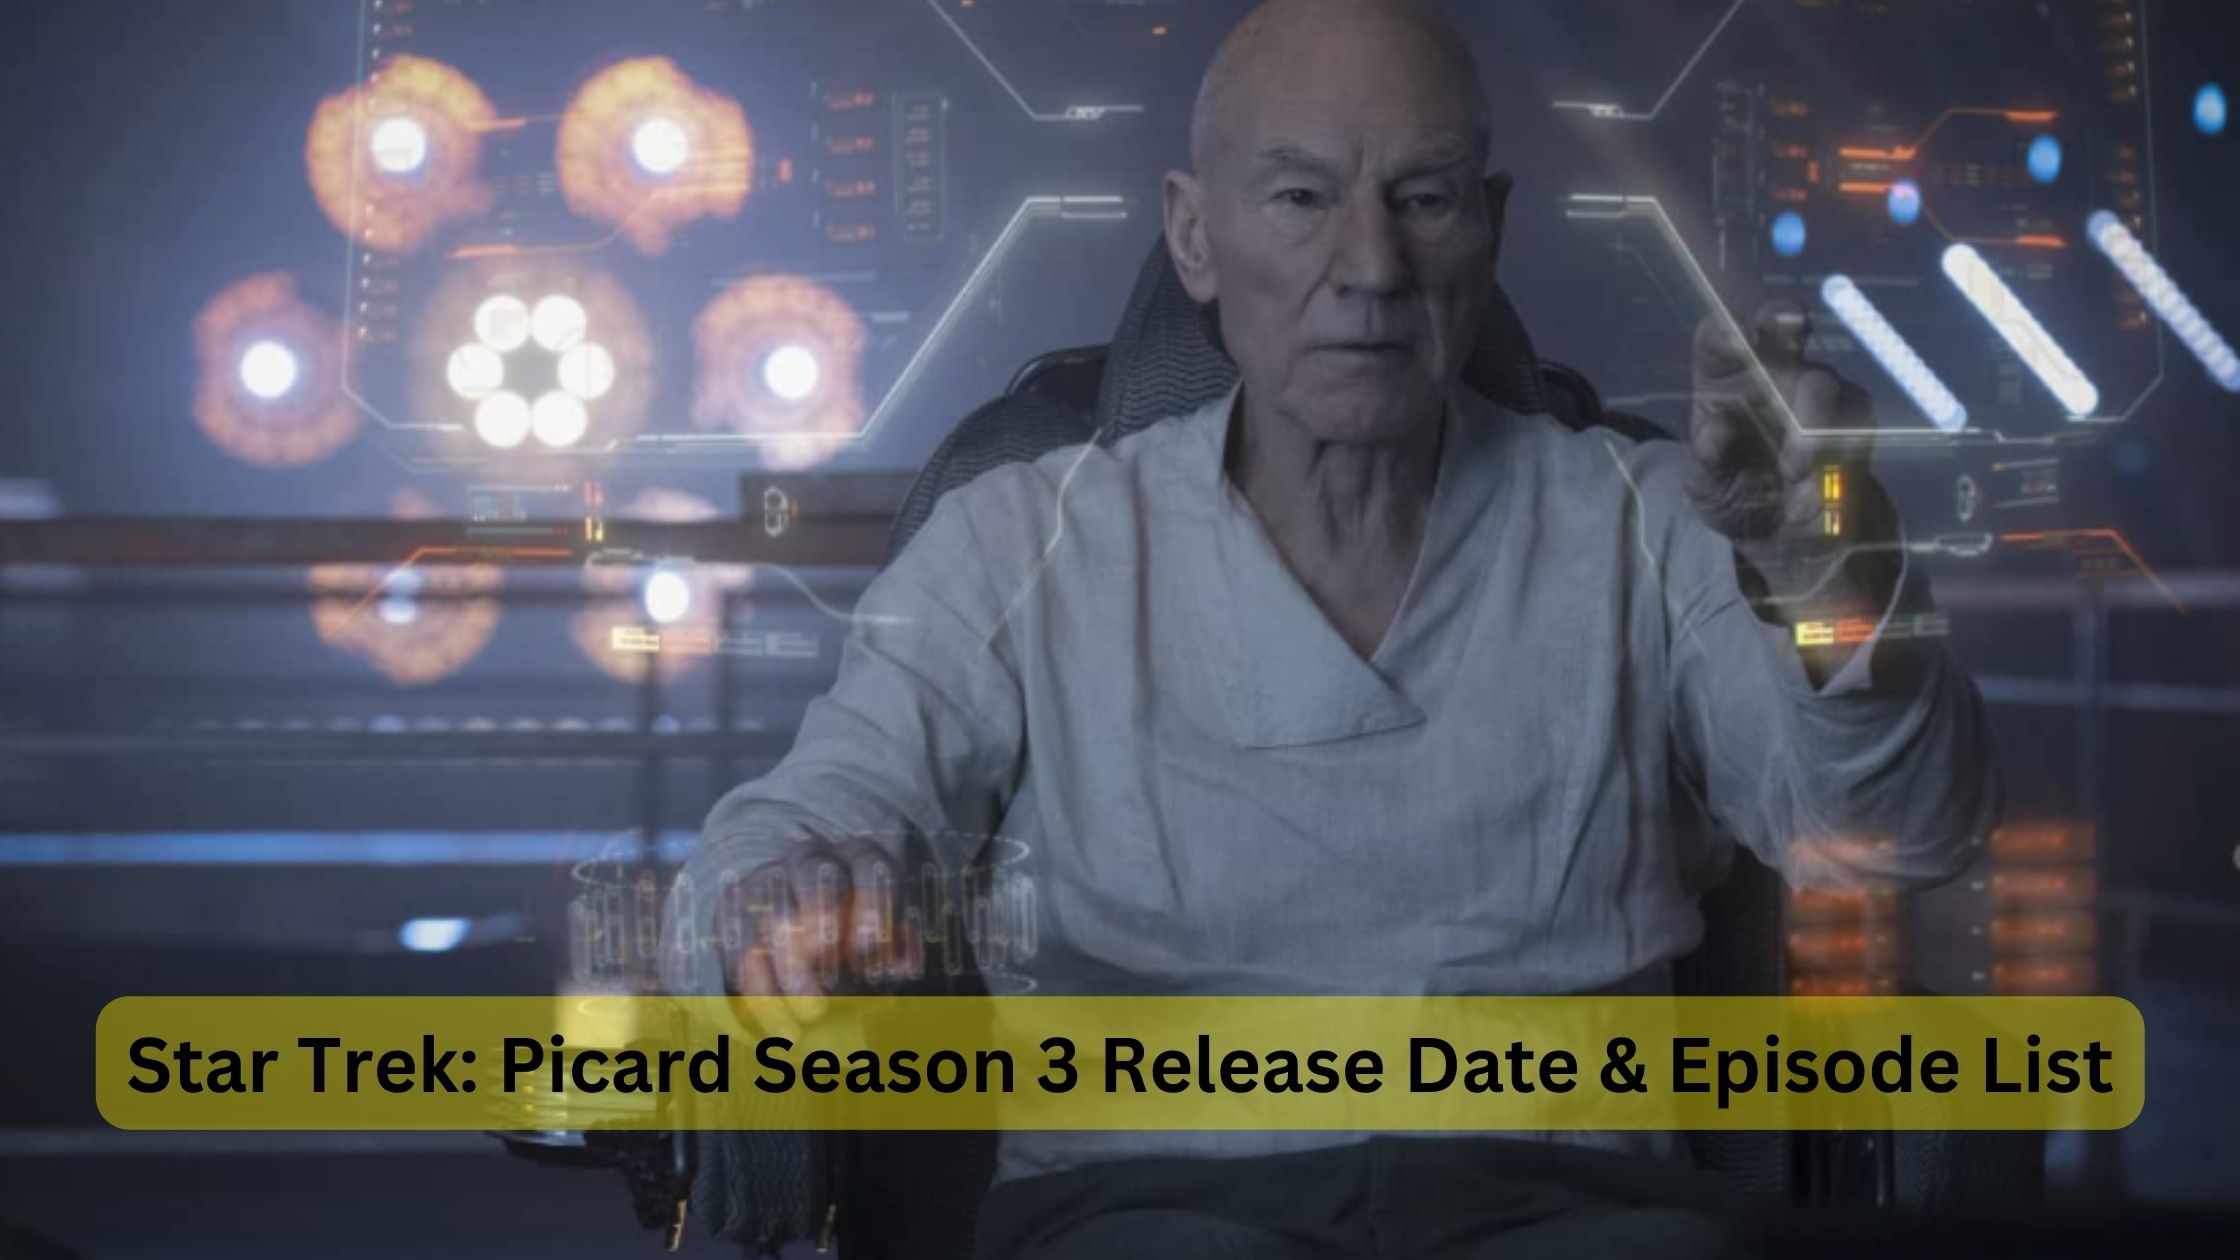 Star Trek: Picard Season 3 Episode List